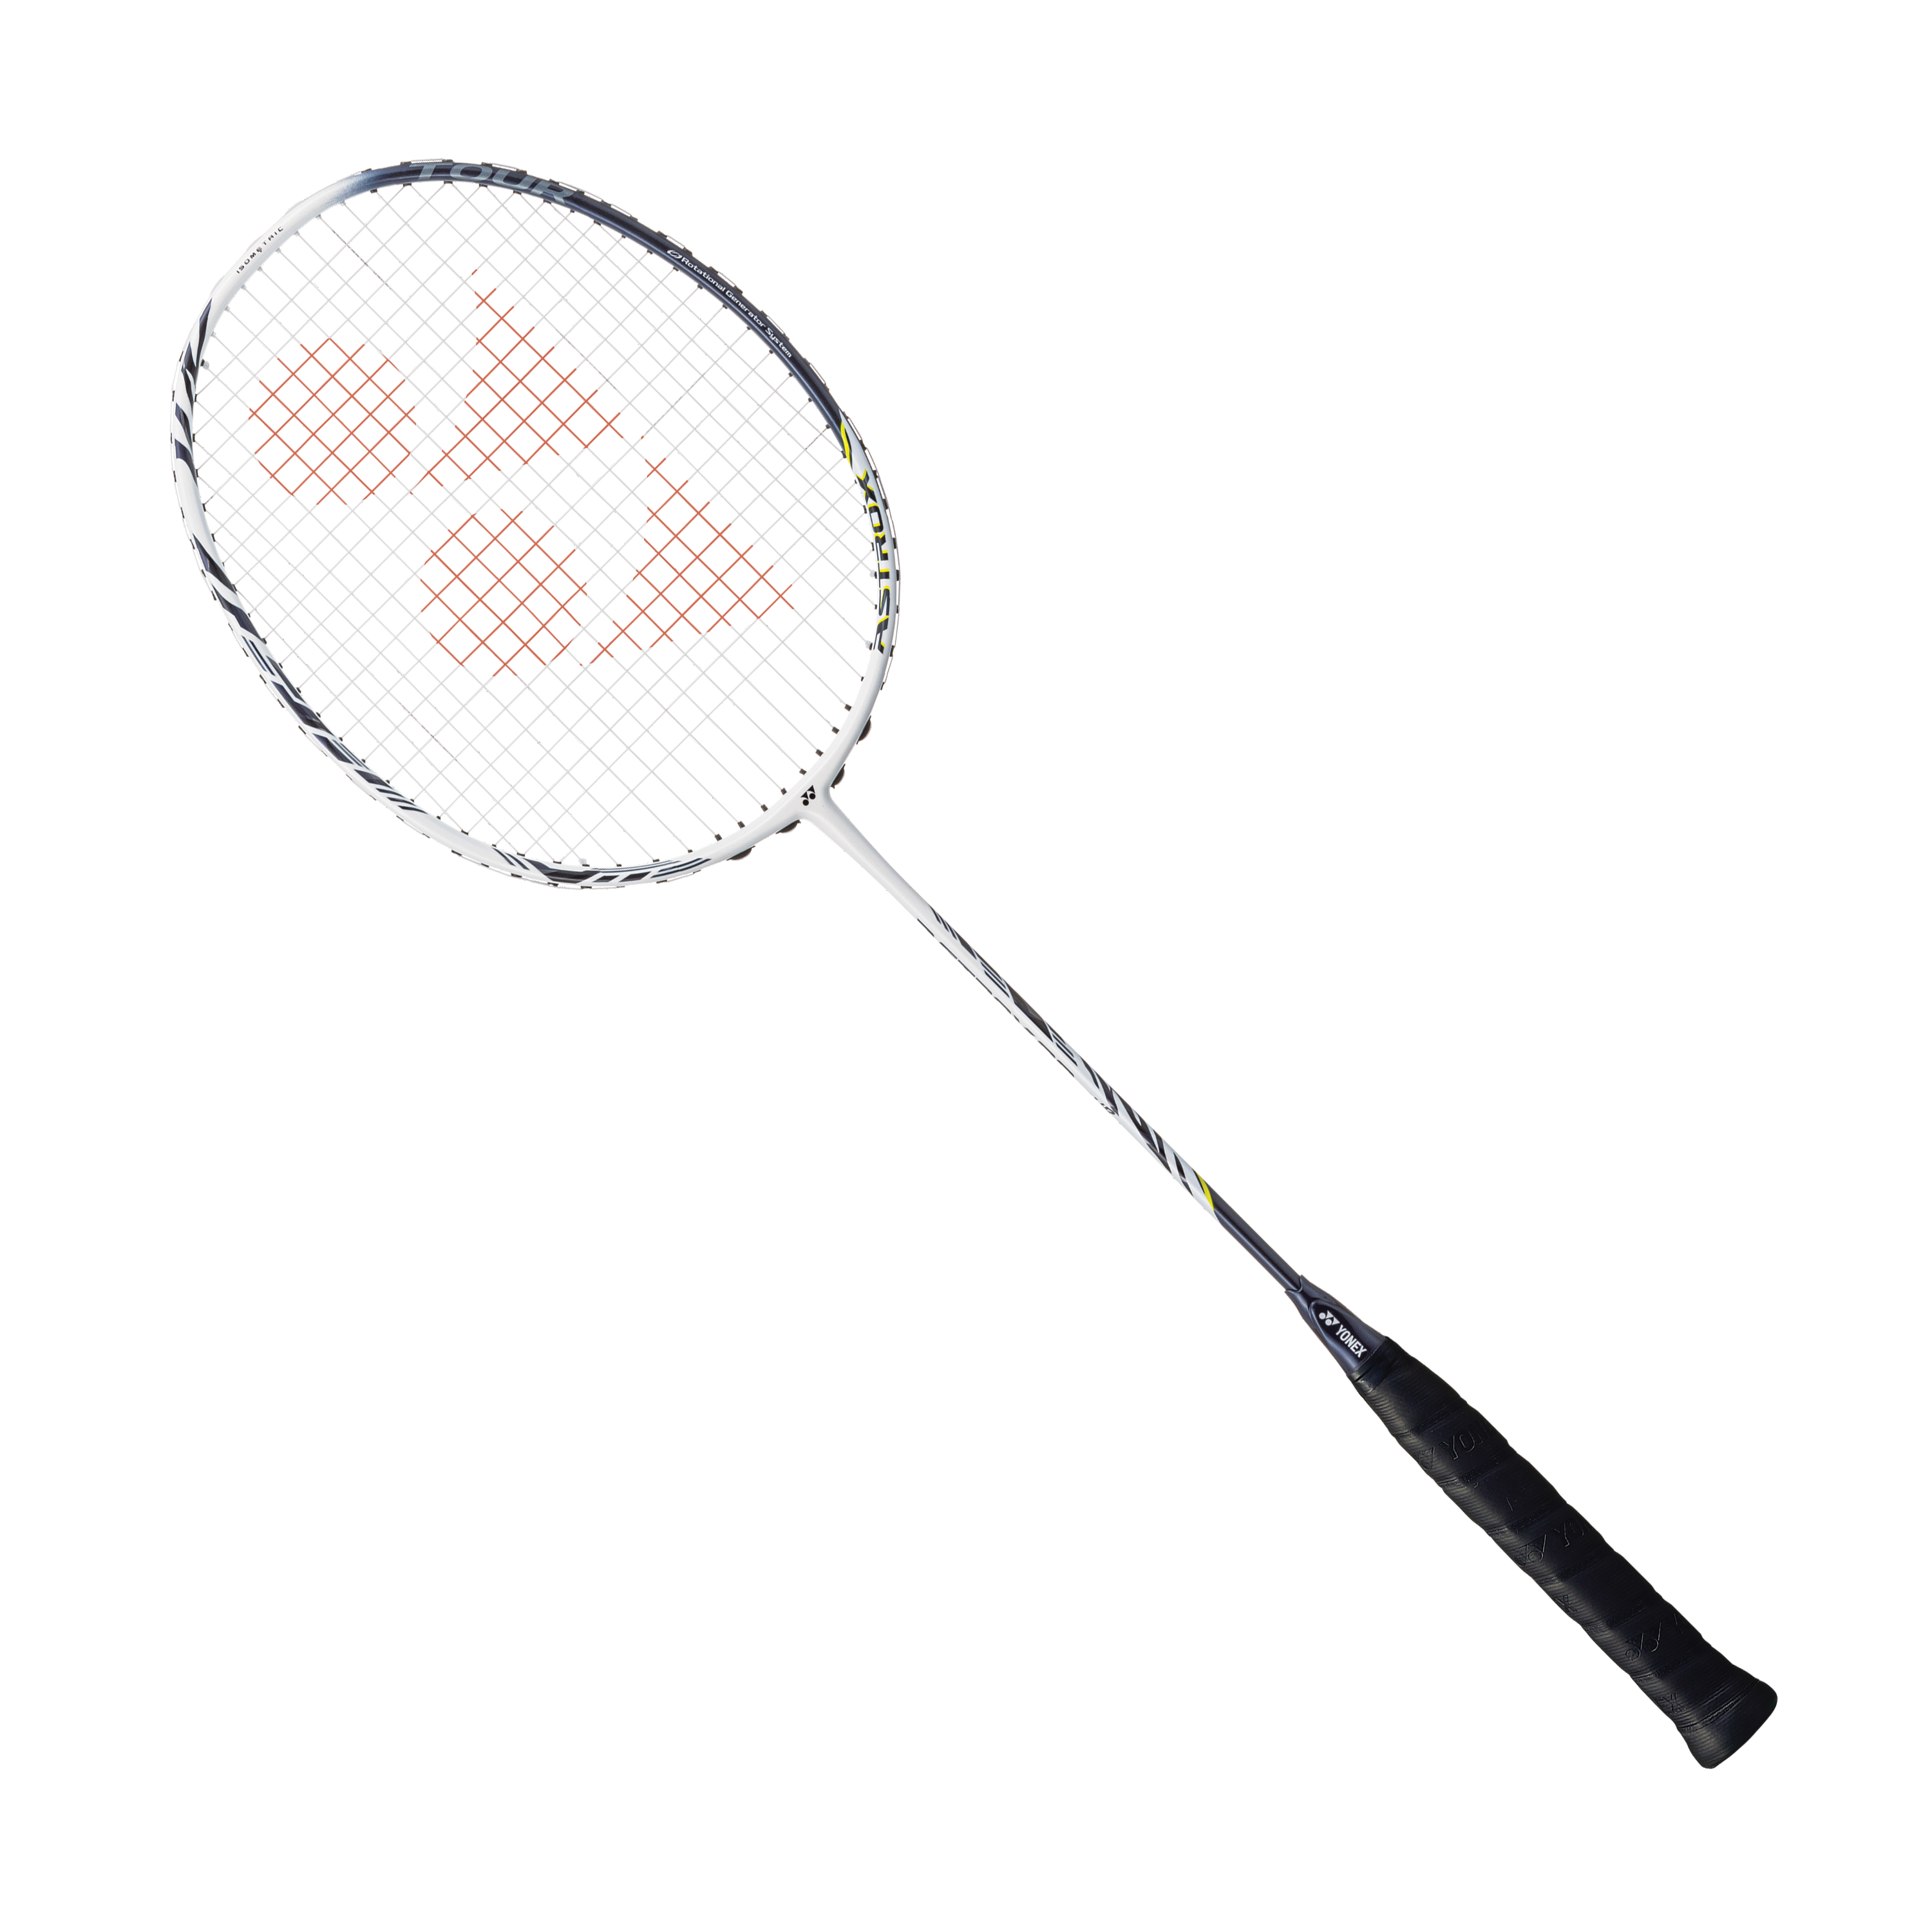 Yonex Astrox 99 Tour Badminton Racquet White Tiger 4U(83g)G5 (Ready to Go)